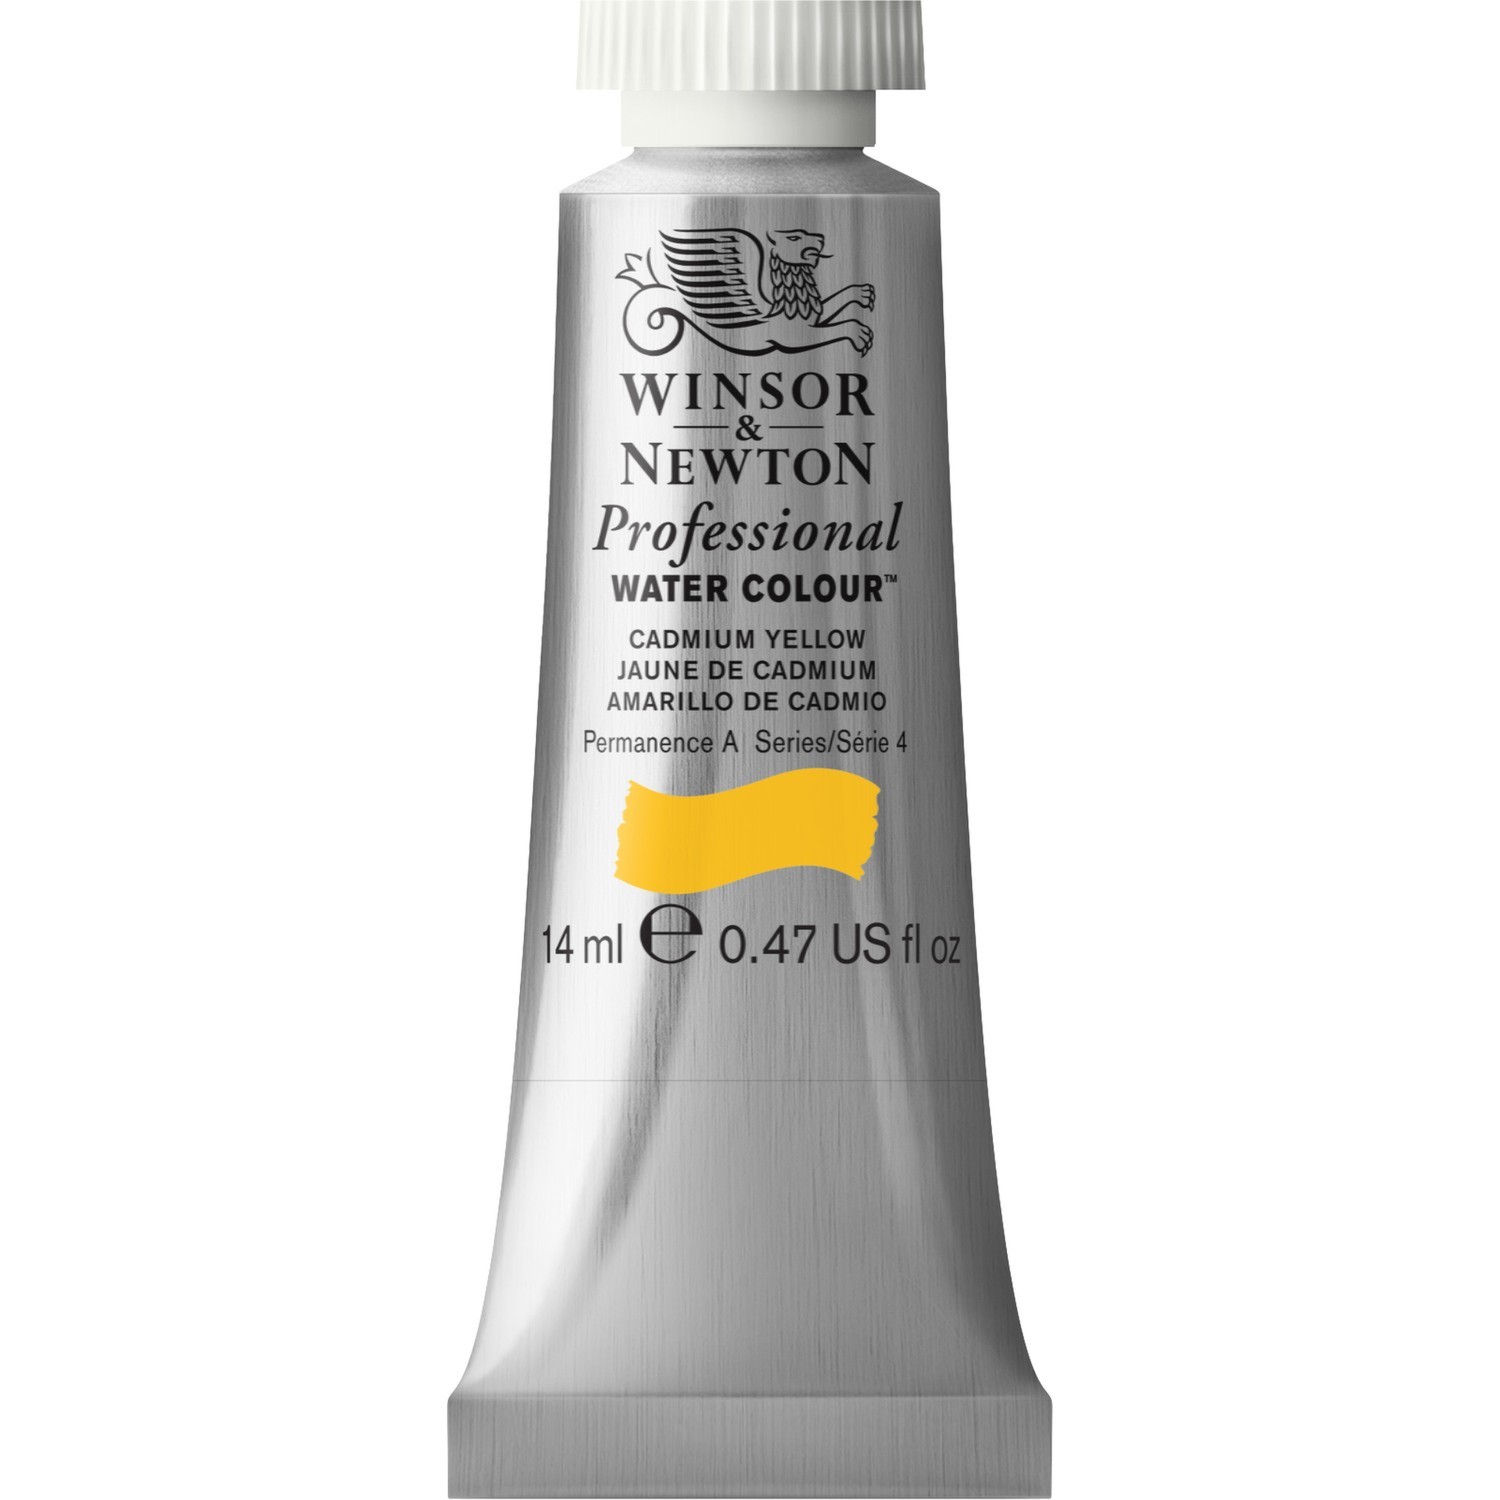 Winsor and Newton 14ml Professional Watercolour Paint - Cadium Yellow Image 1